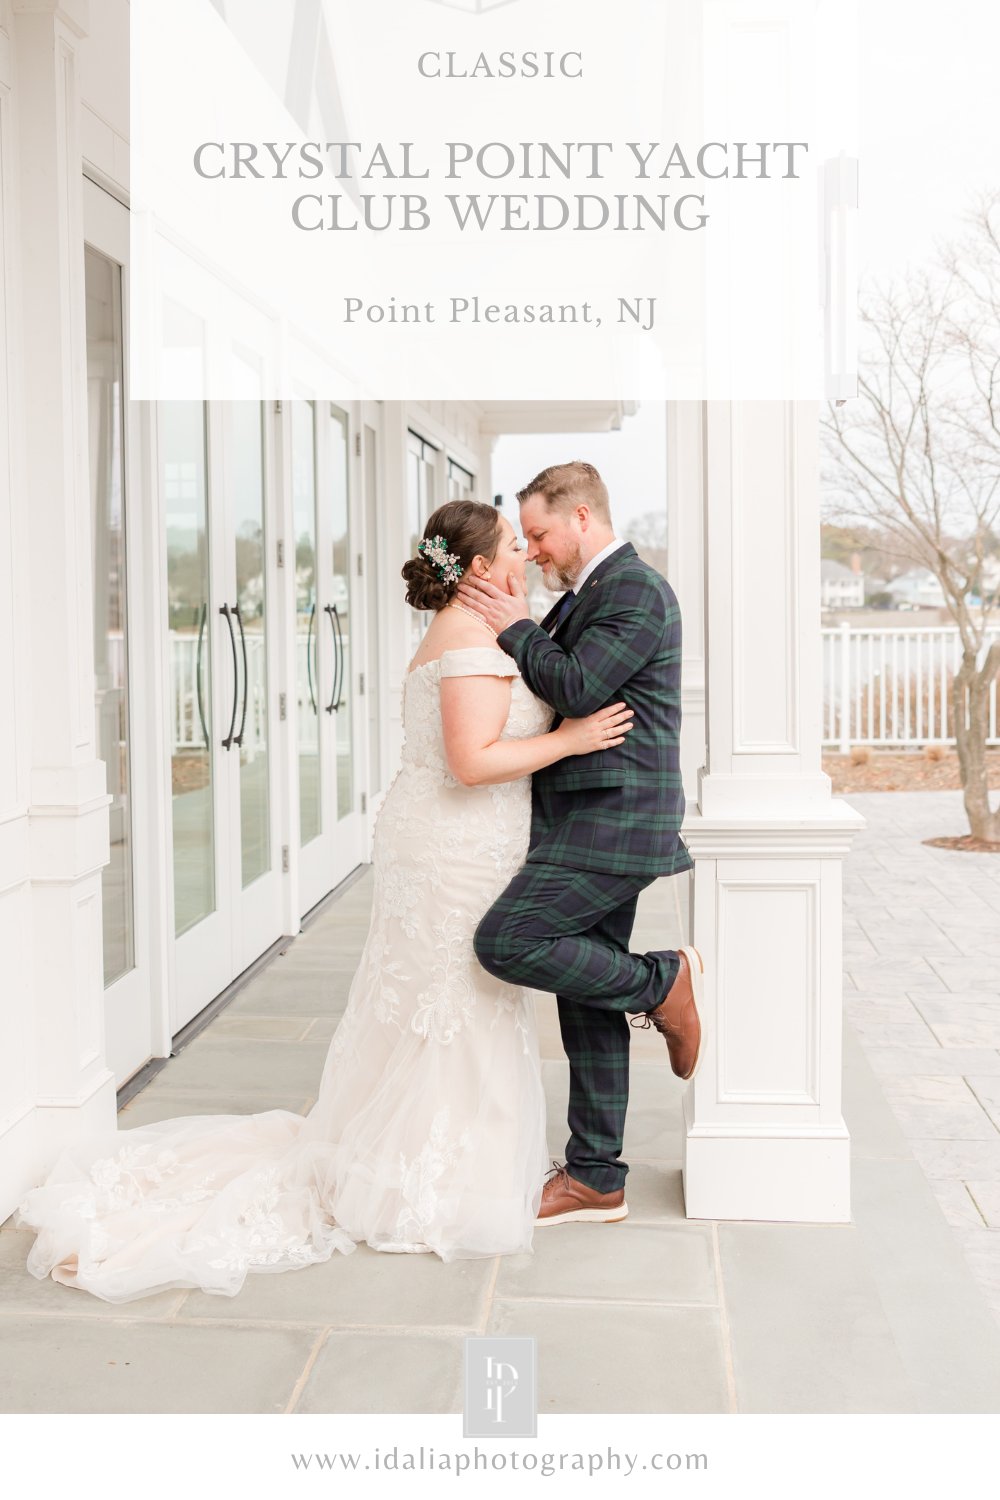 Springtime Crystal Point Yacht Club on St. Patrick's Day with New Jersey wedding photographer Idalia Photography